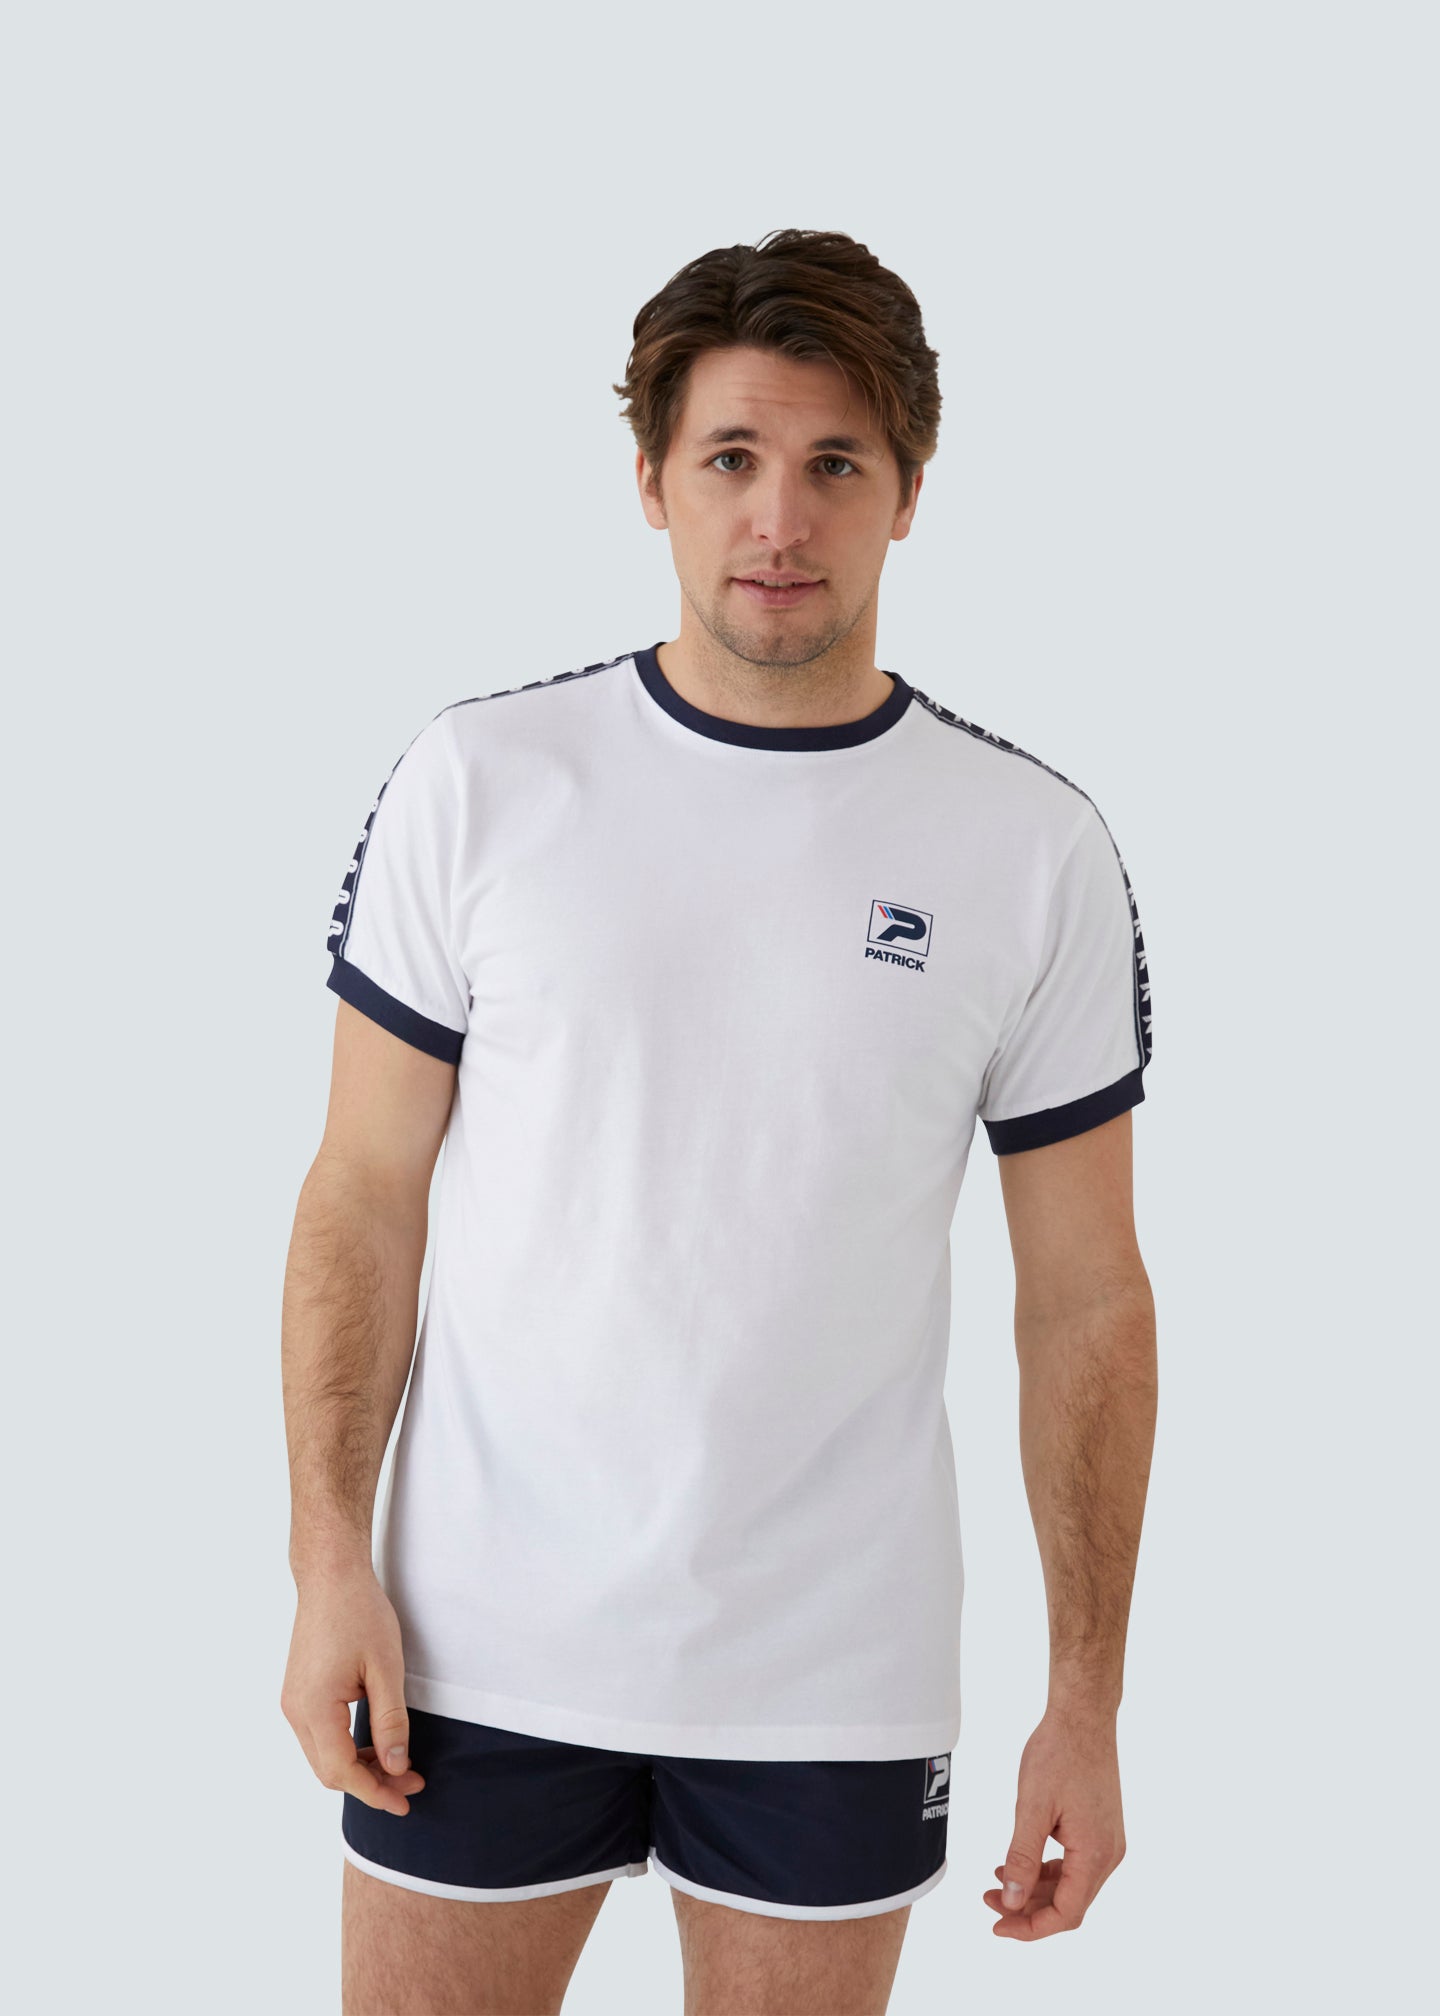 Patrick Frank T-Shirt - White - Front